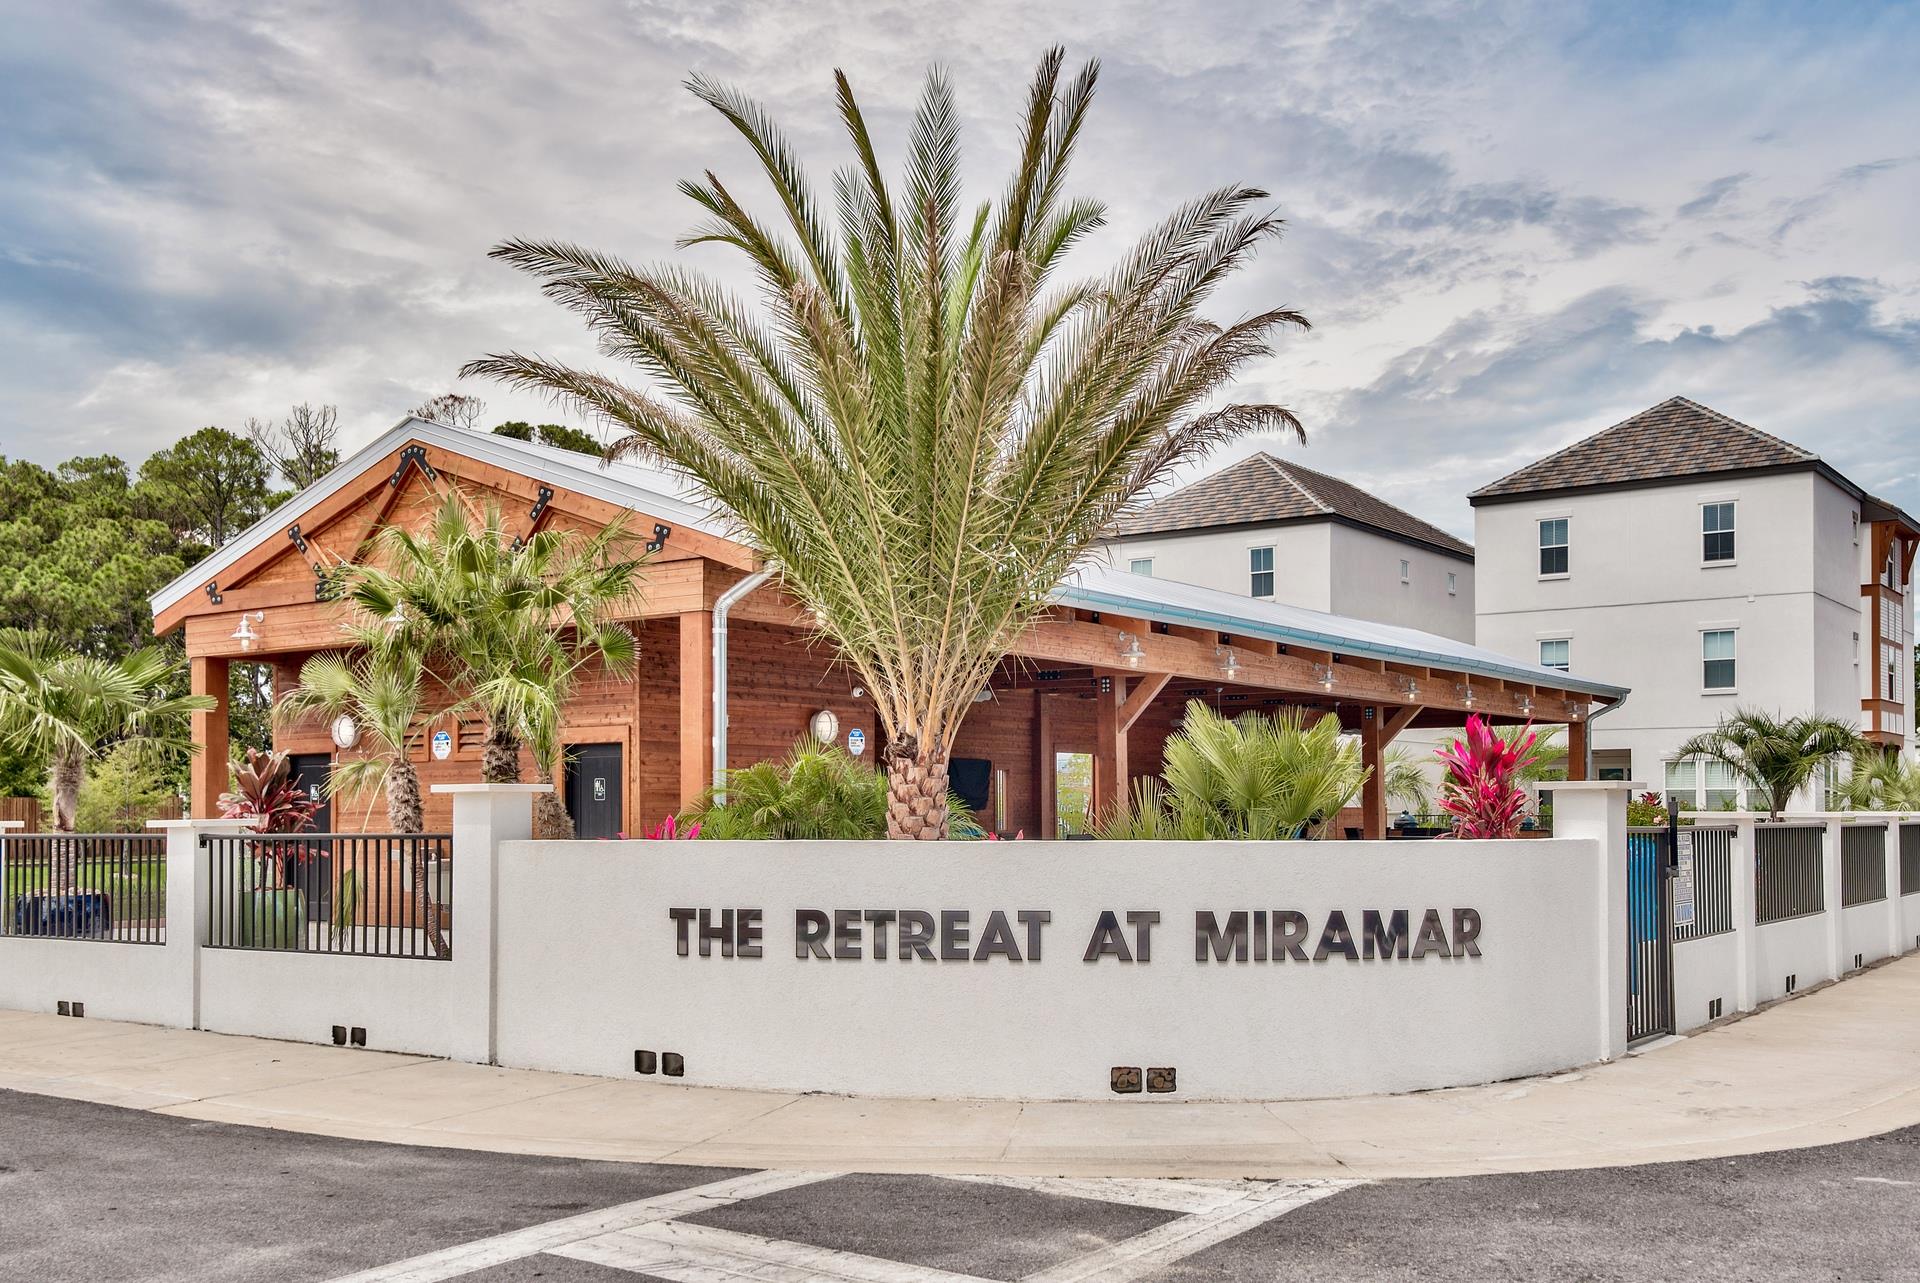 The Retreat At Miramar pool and rec center